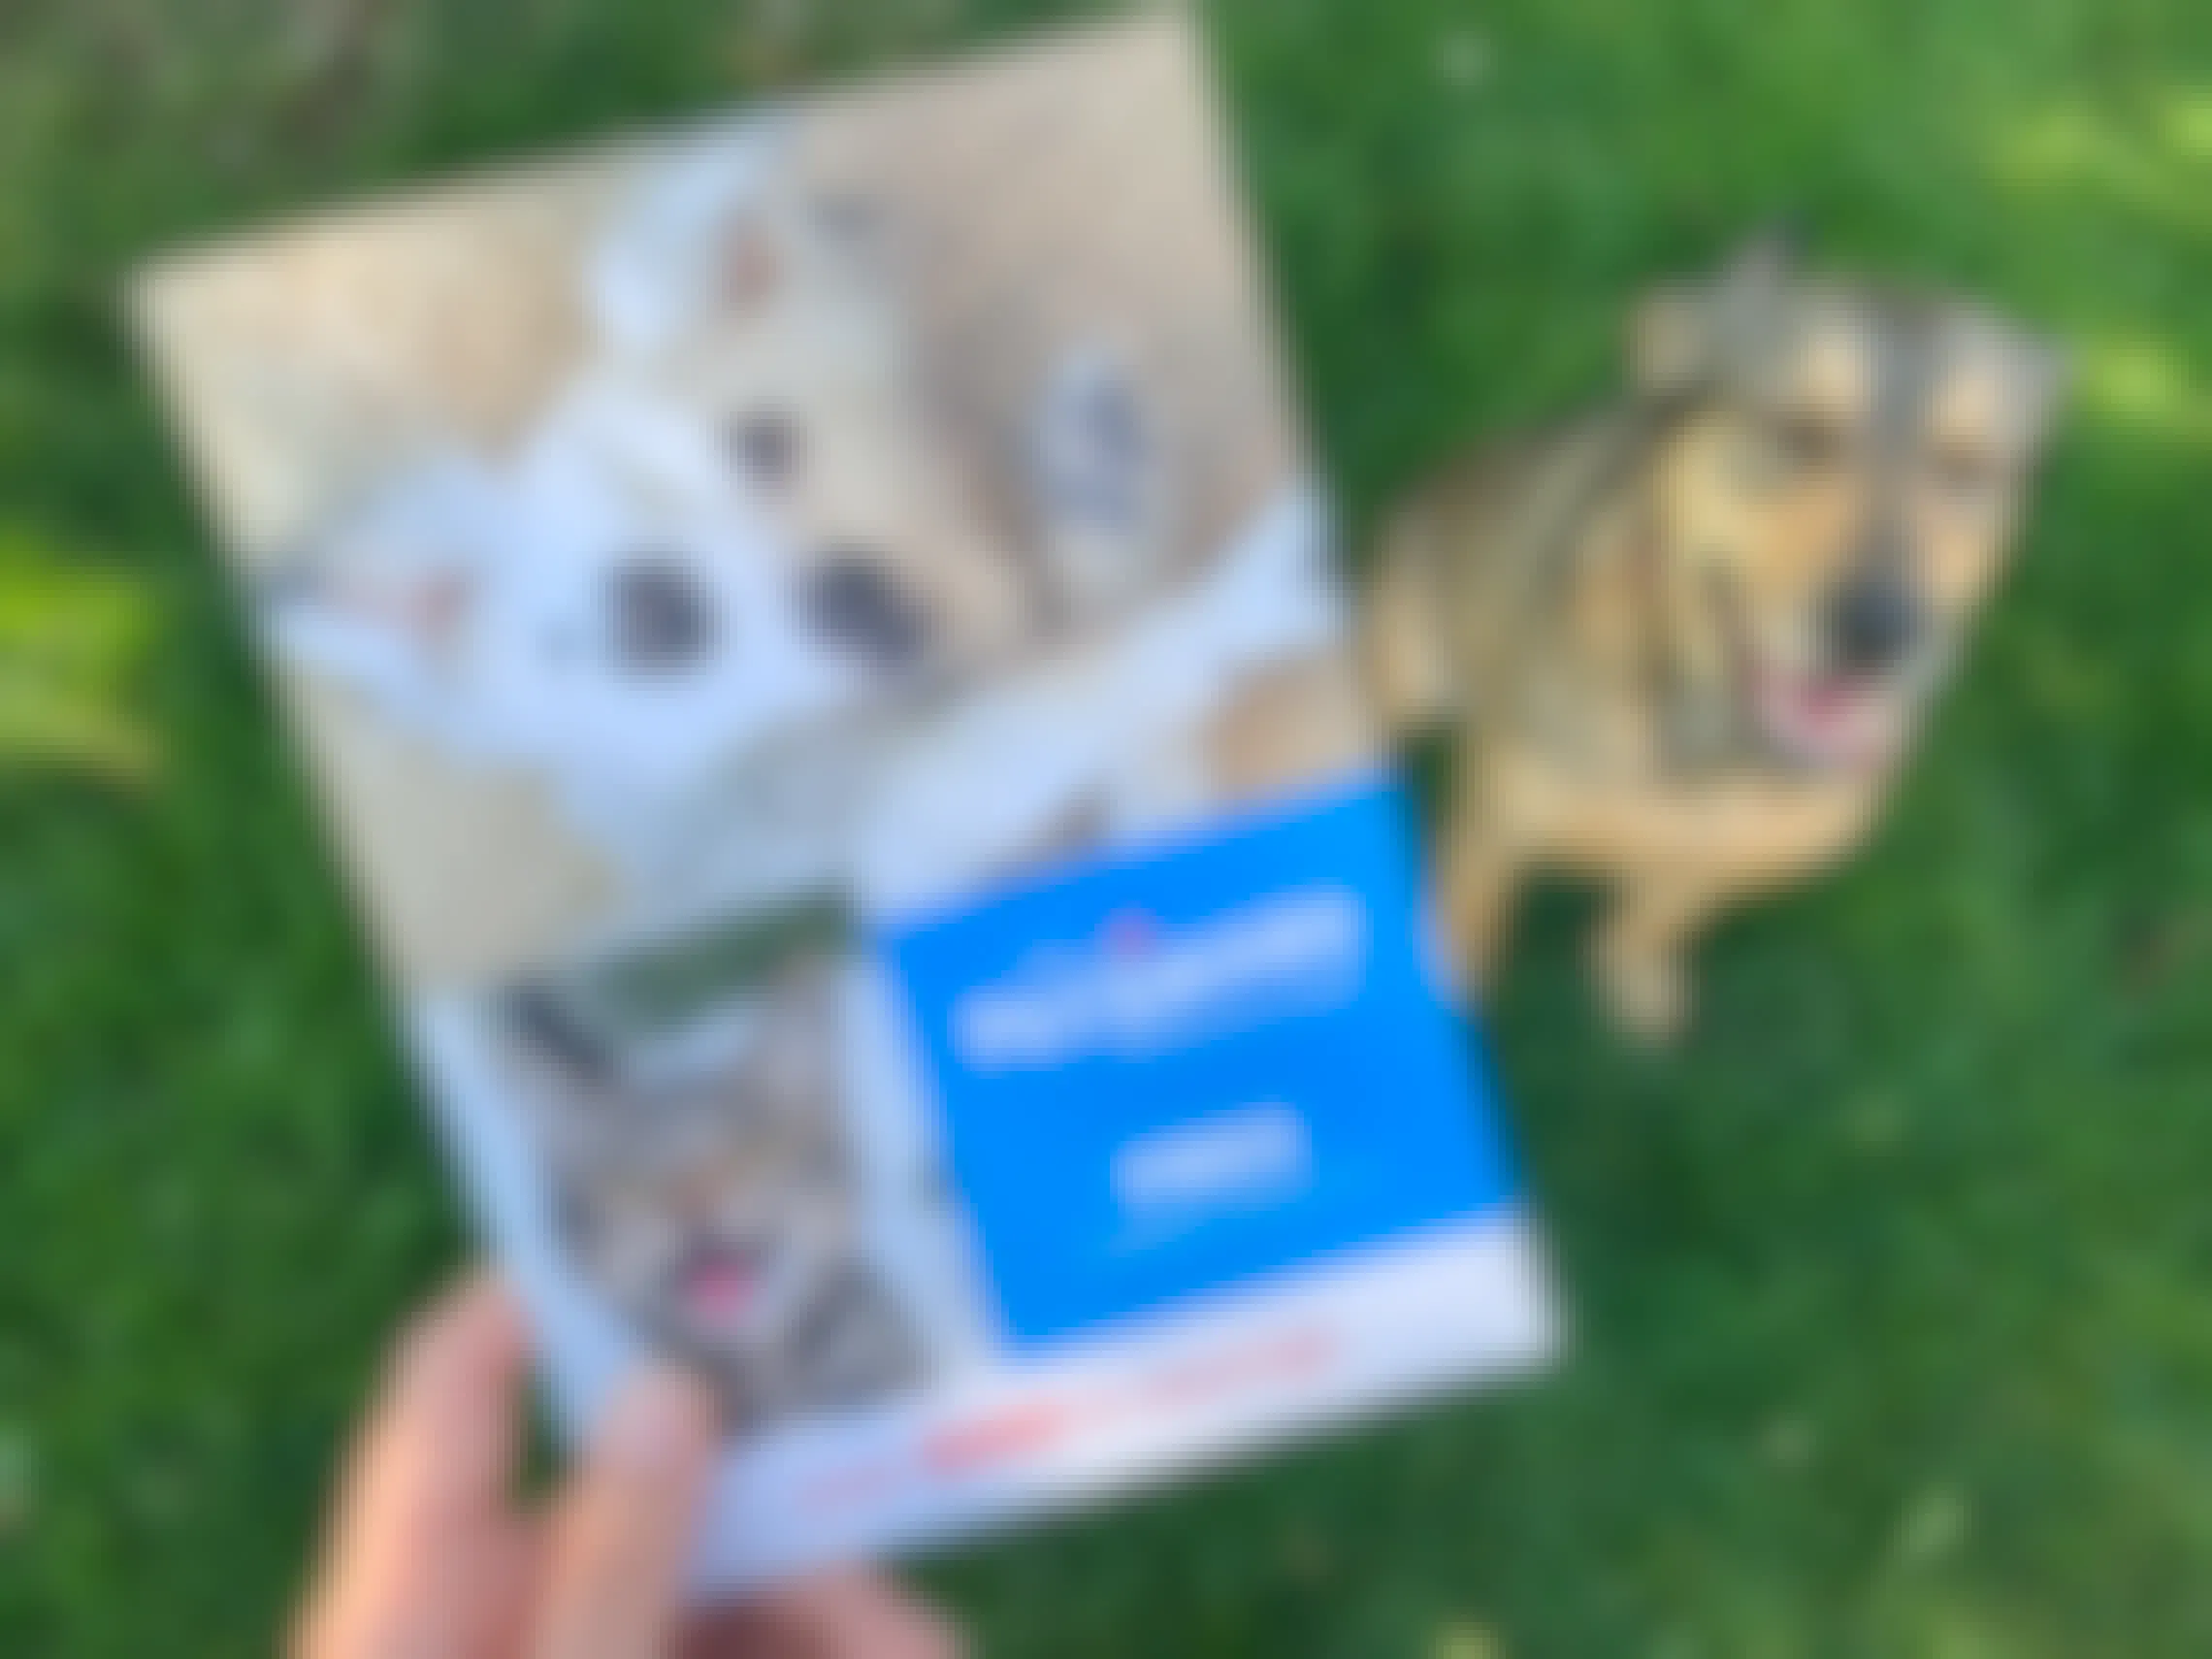 someone holding petsmart adoption starter kit coupon in front of dog